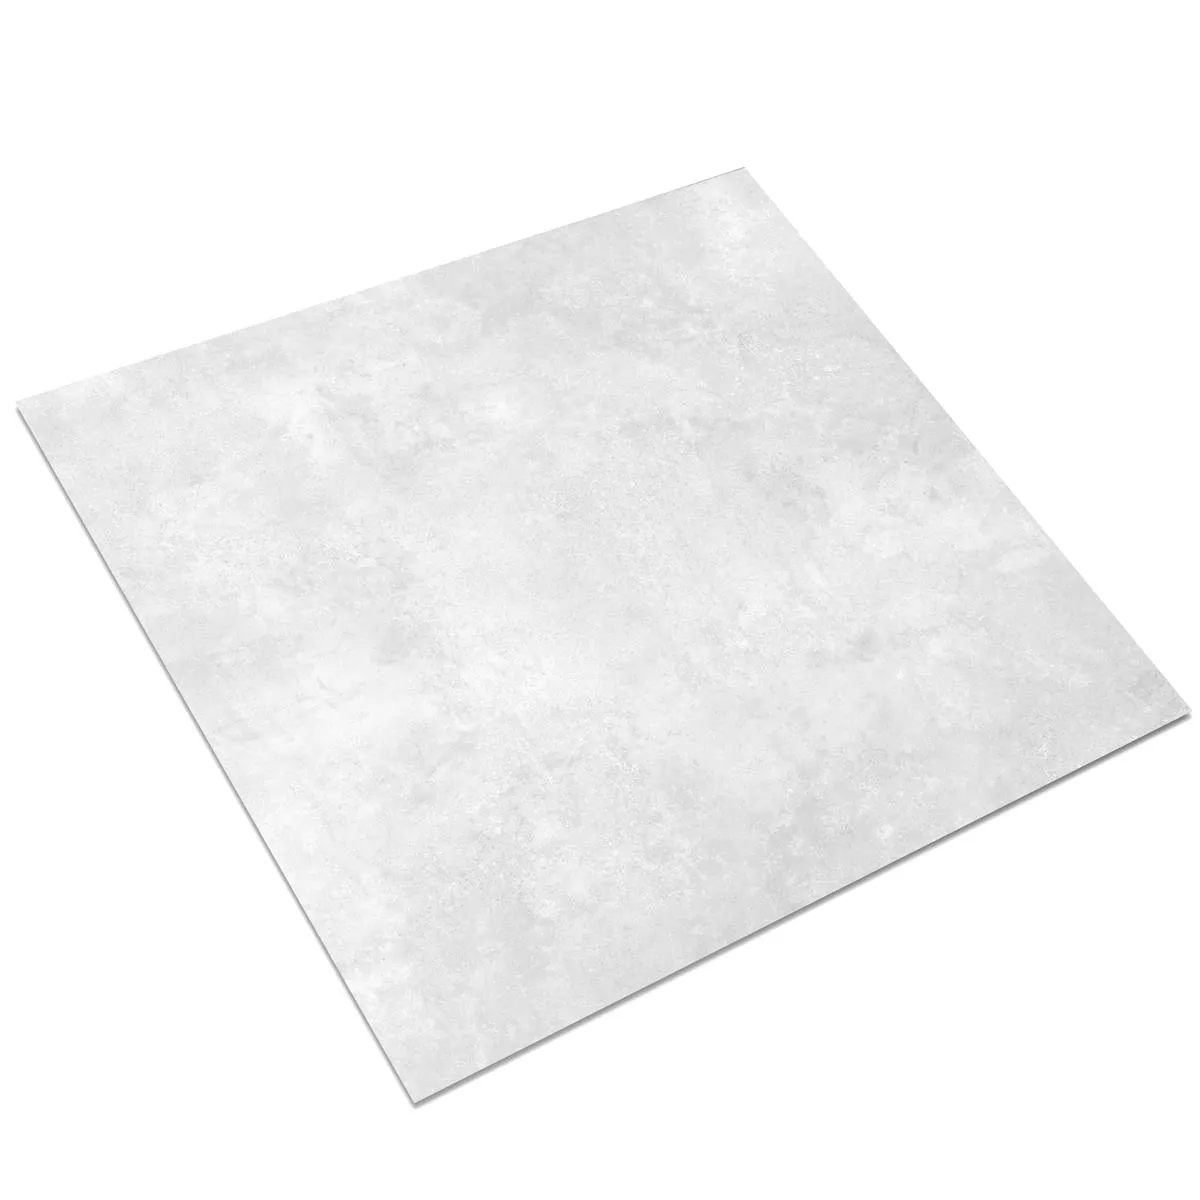 Podlahová Dlaždice Illusion Kovový Vzhled Lappato Bílá 120x120cm